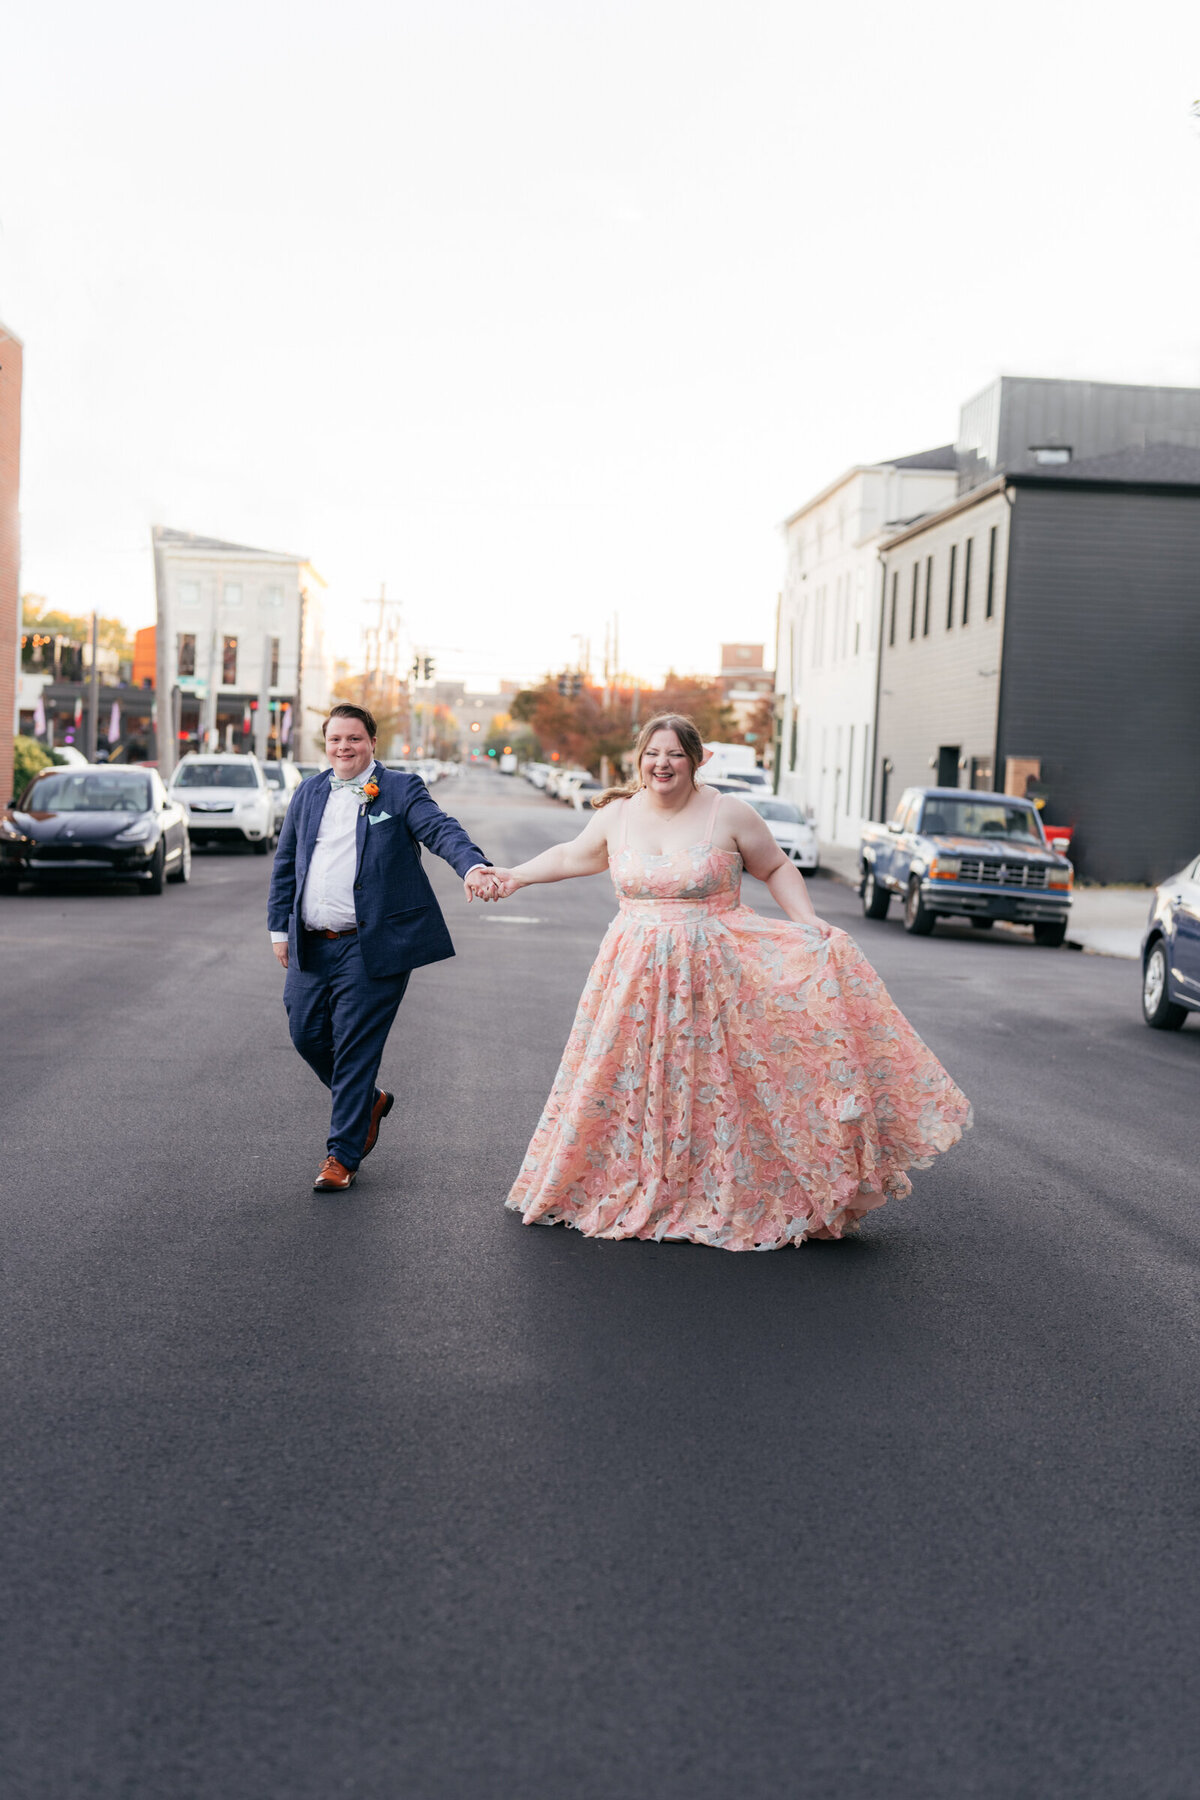 bride wearing colorful wedding dress walking with groom